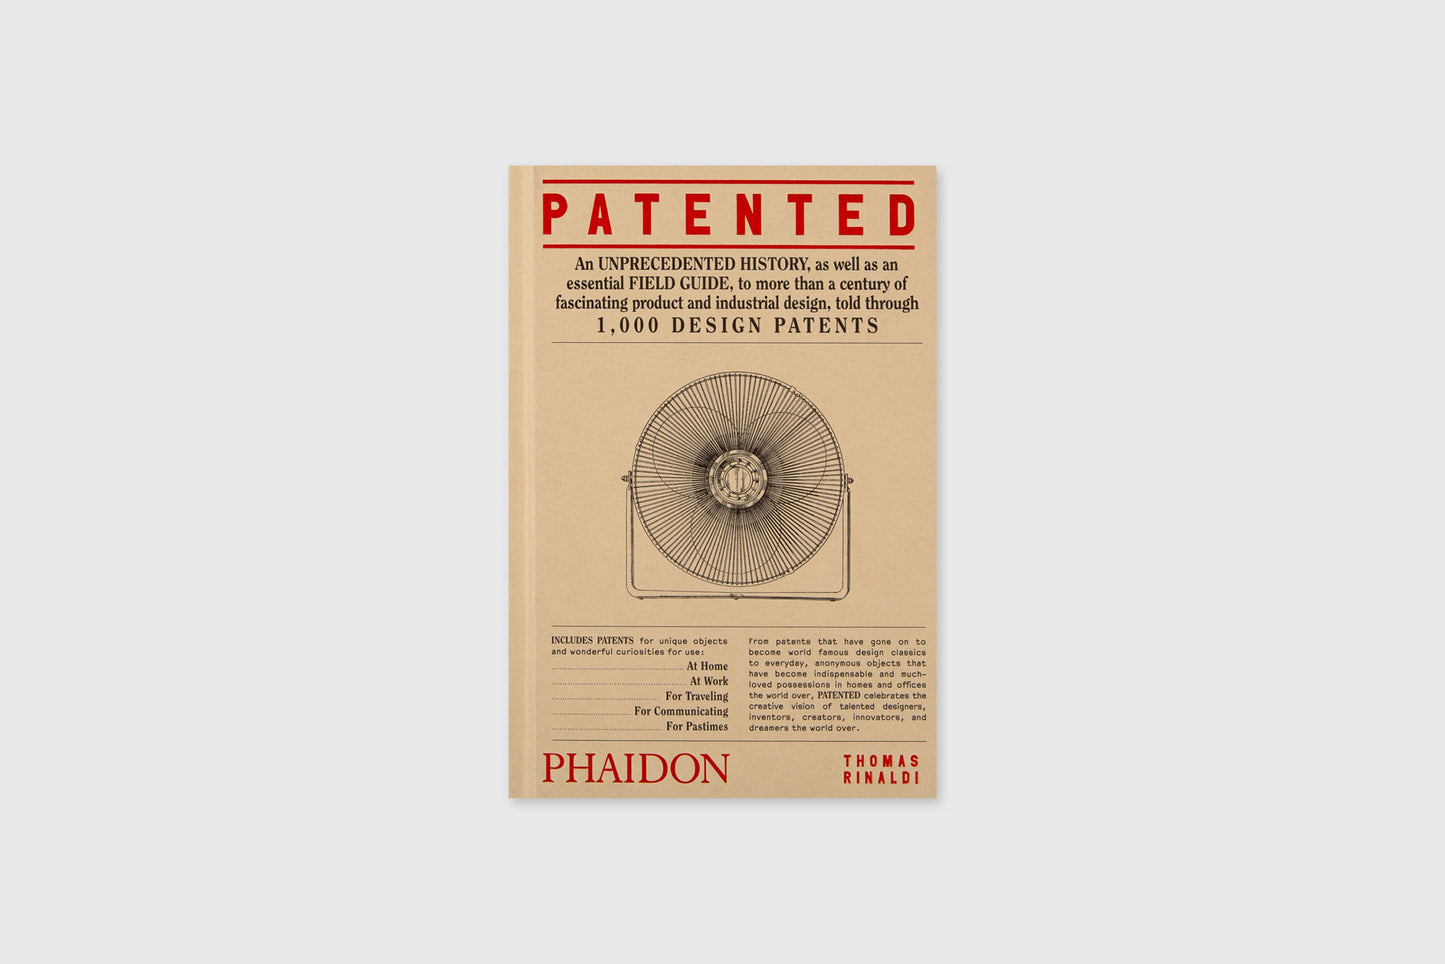 Patented, 1,000 Design Patents